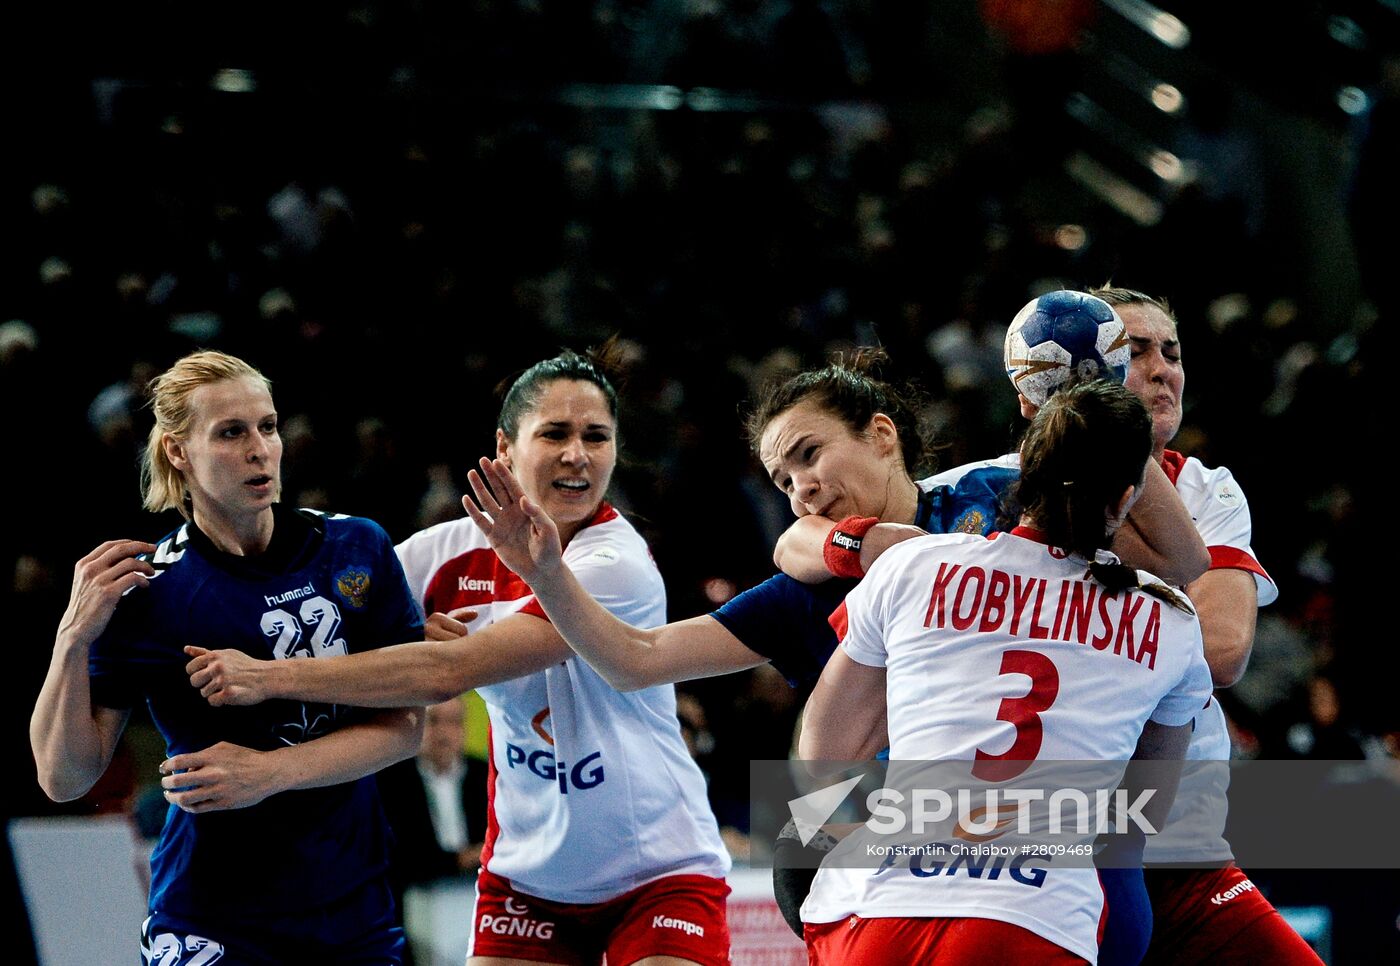 2016 Women's Olympic Handball Tournament Qualification. Russia vs. Poland